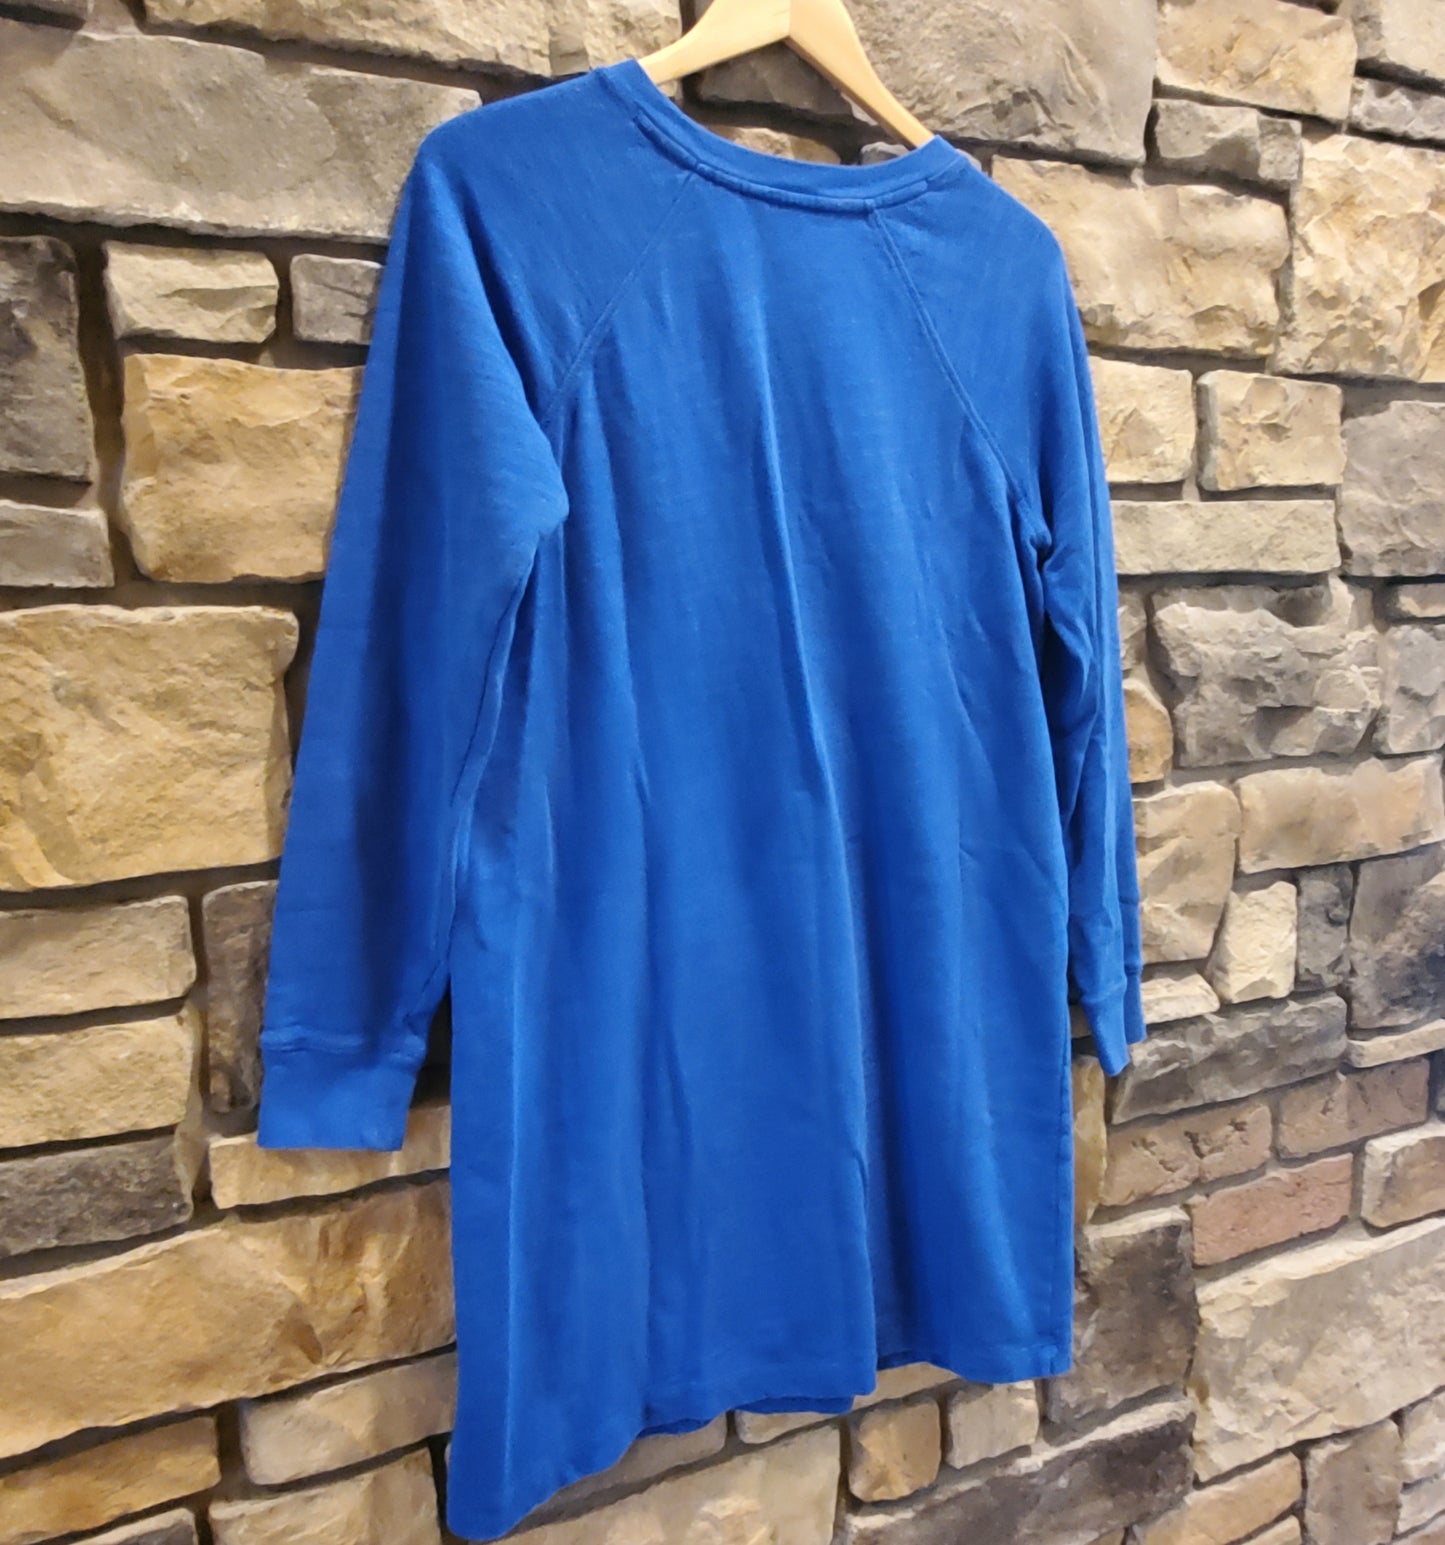 Boden Mabel Sweatshirt Dress - Stripes - Blue Multi/Summit - 8